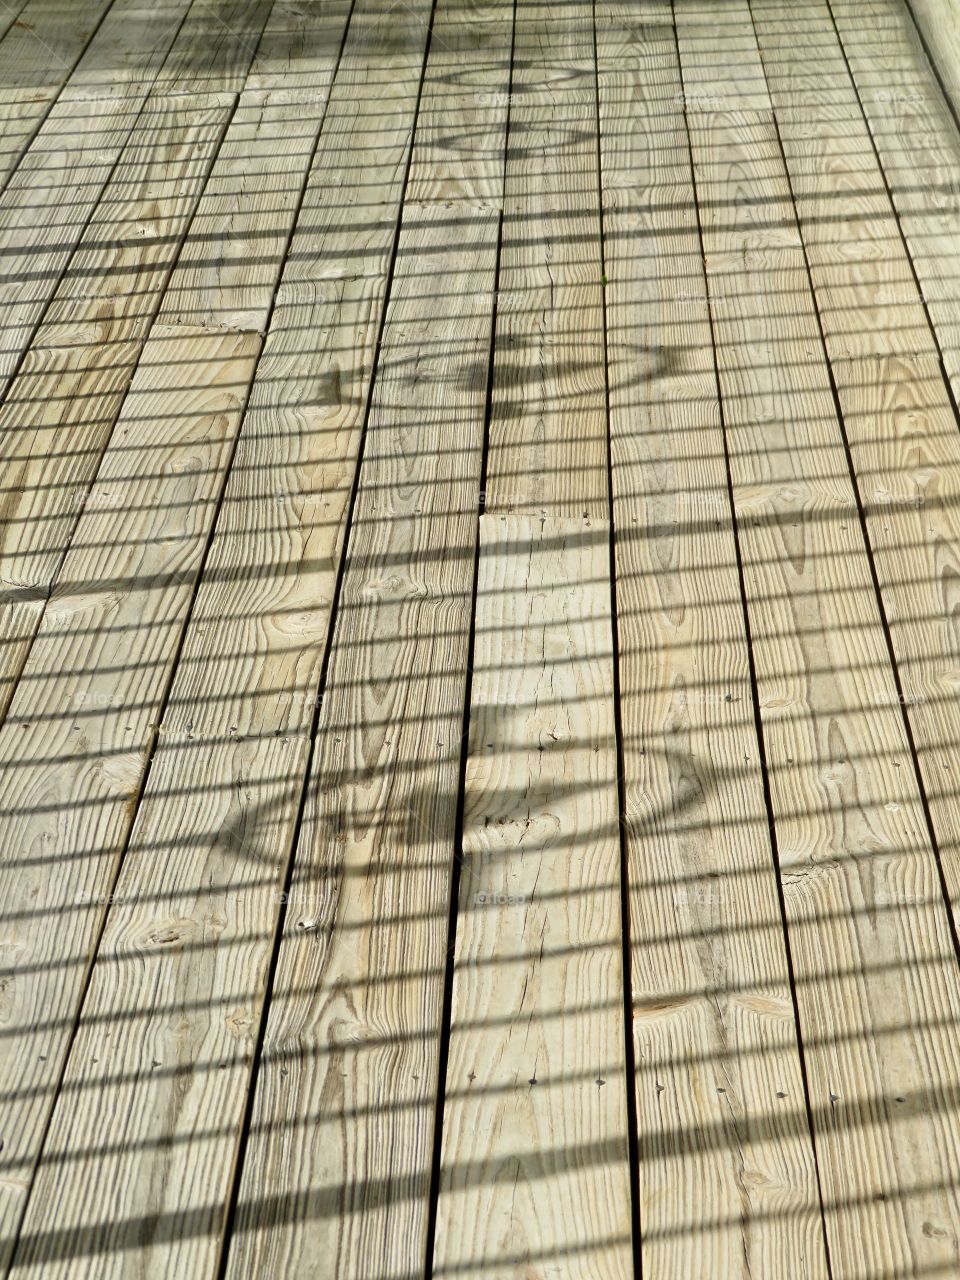 Shadows on planks